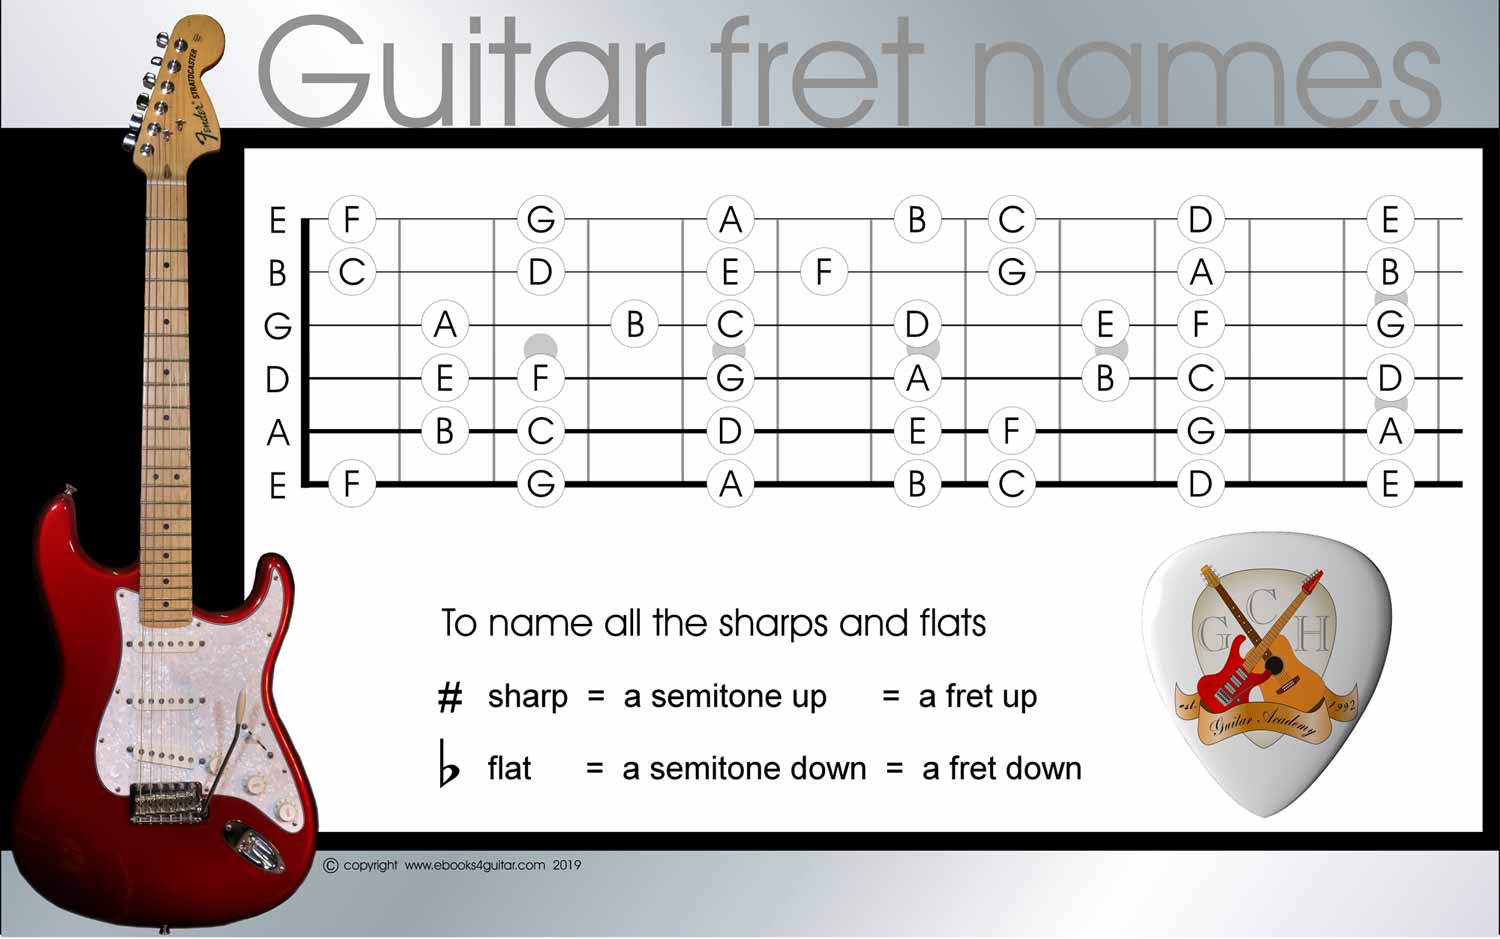 printable image of the guitar fretboard, note names, guitar string names, fret names